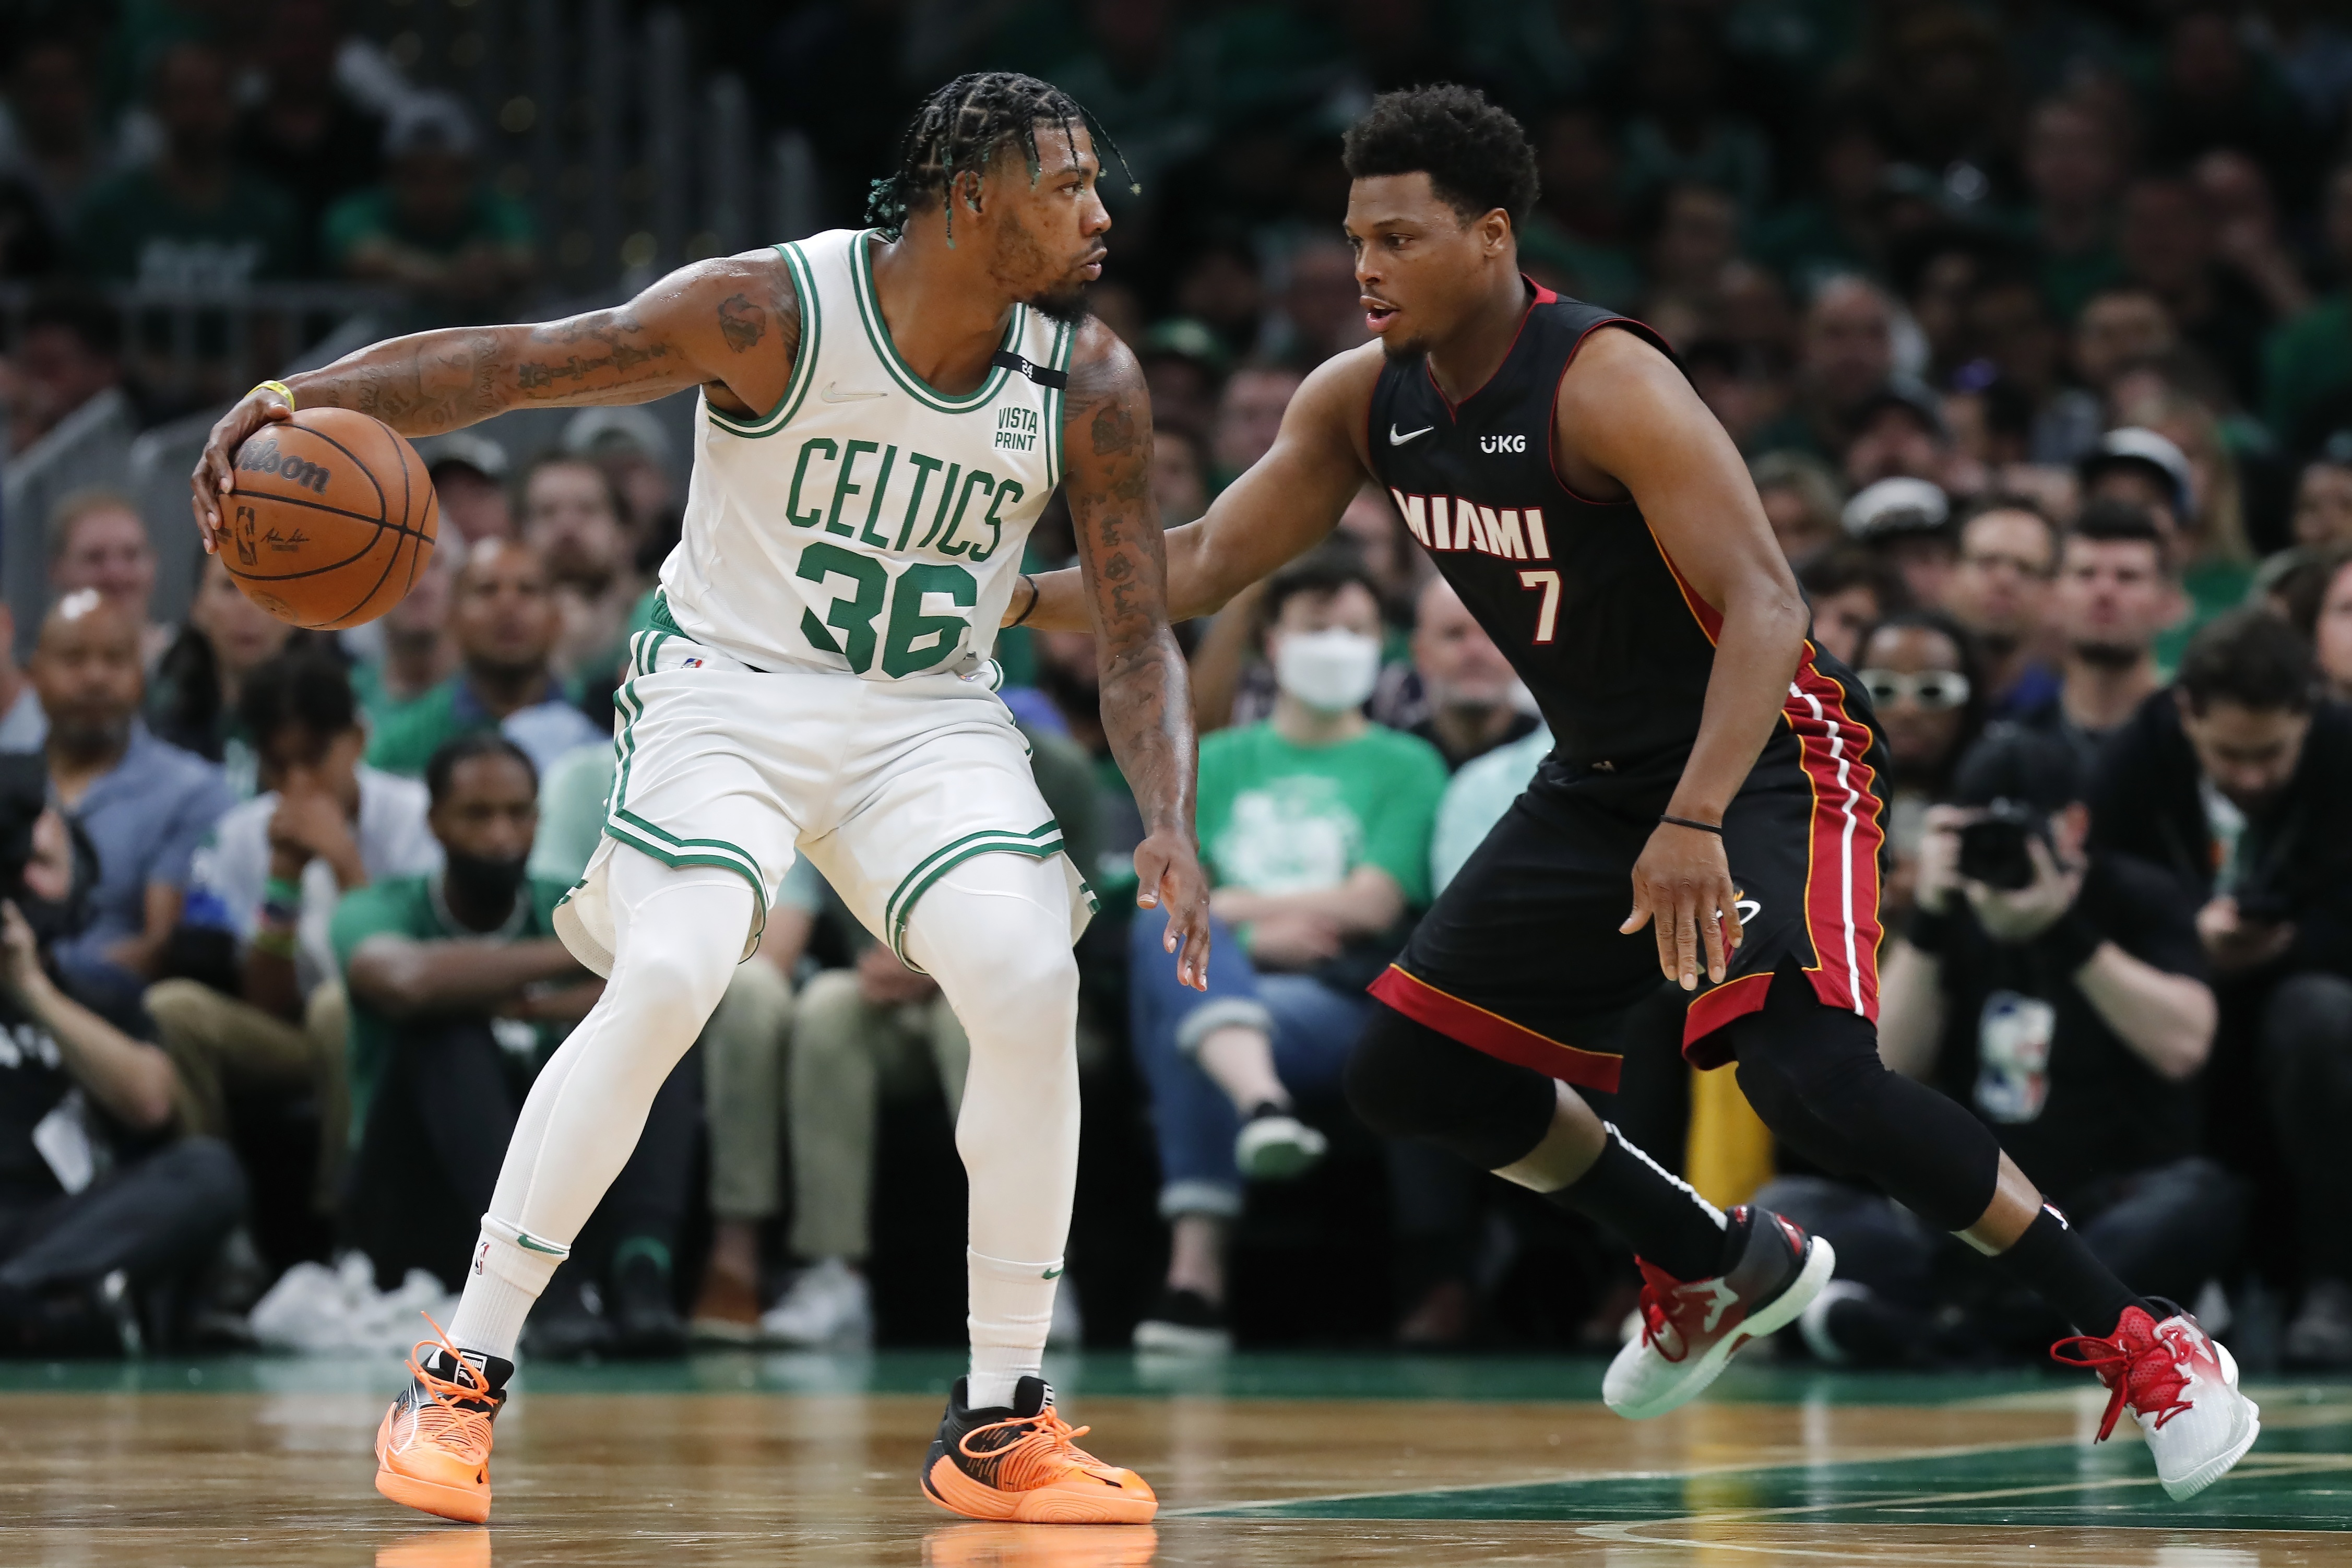 Is Celtics' Marcus Smart playing tonight vs. Heat? Guard's injury